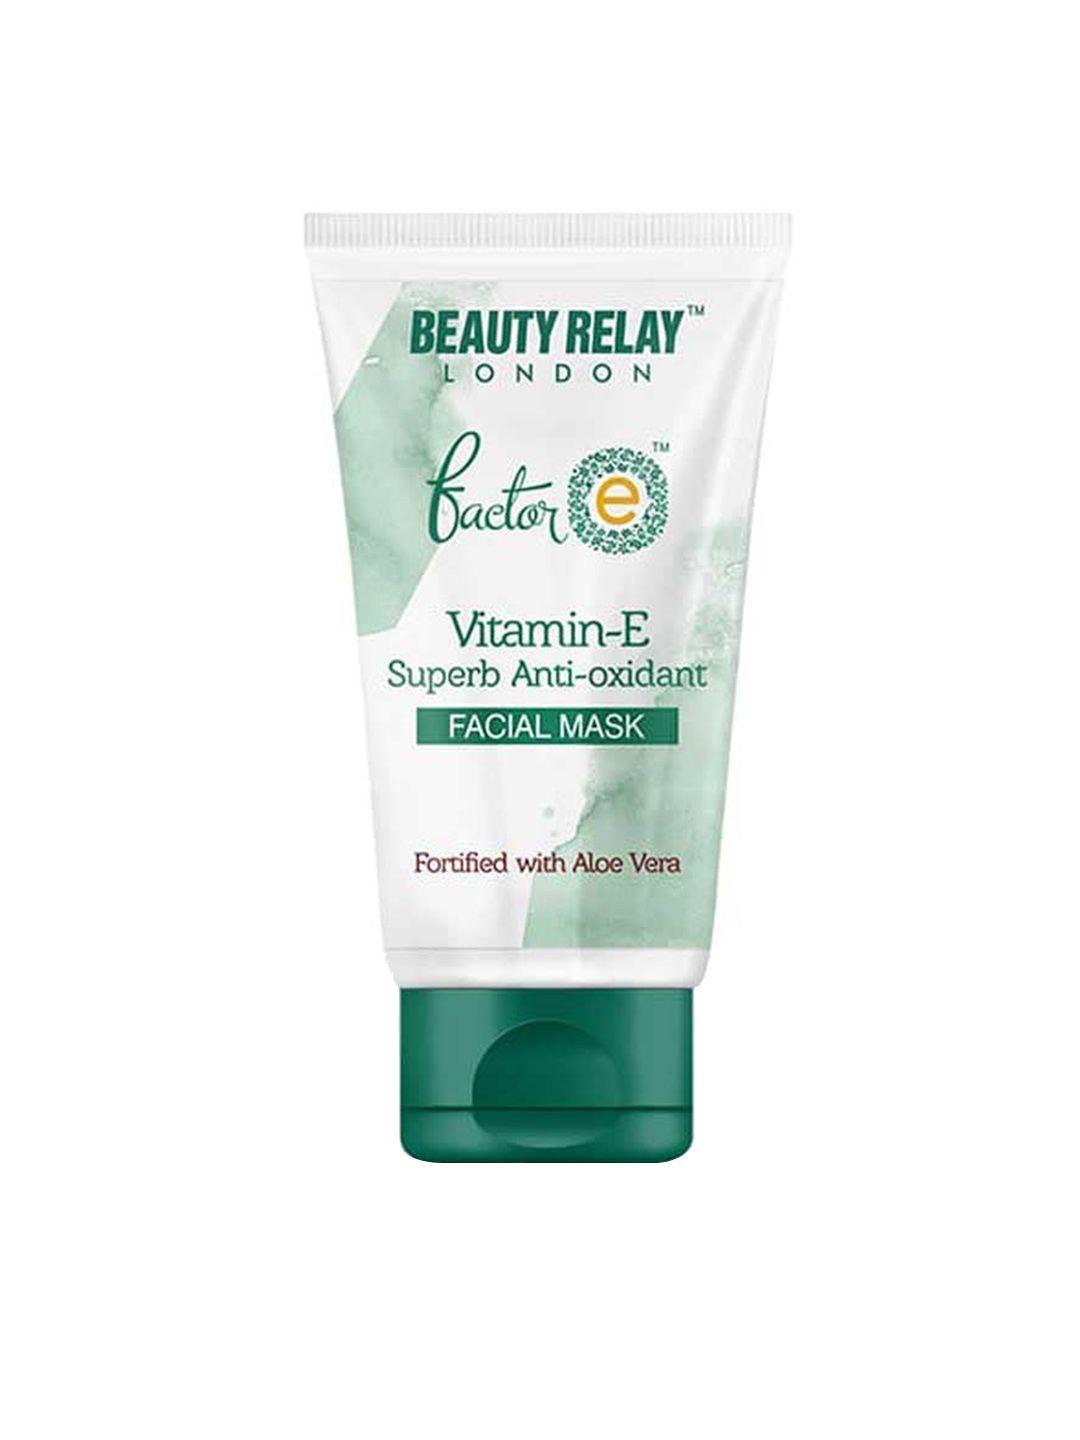 beautyrelay london factor e vitamin-e superb anti-oxidant face mask with aloevera - 200 ml